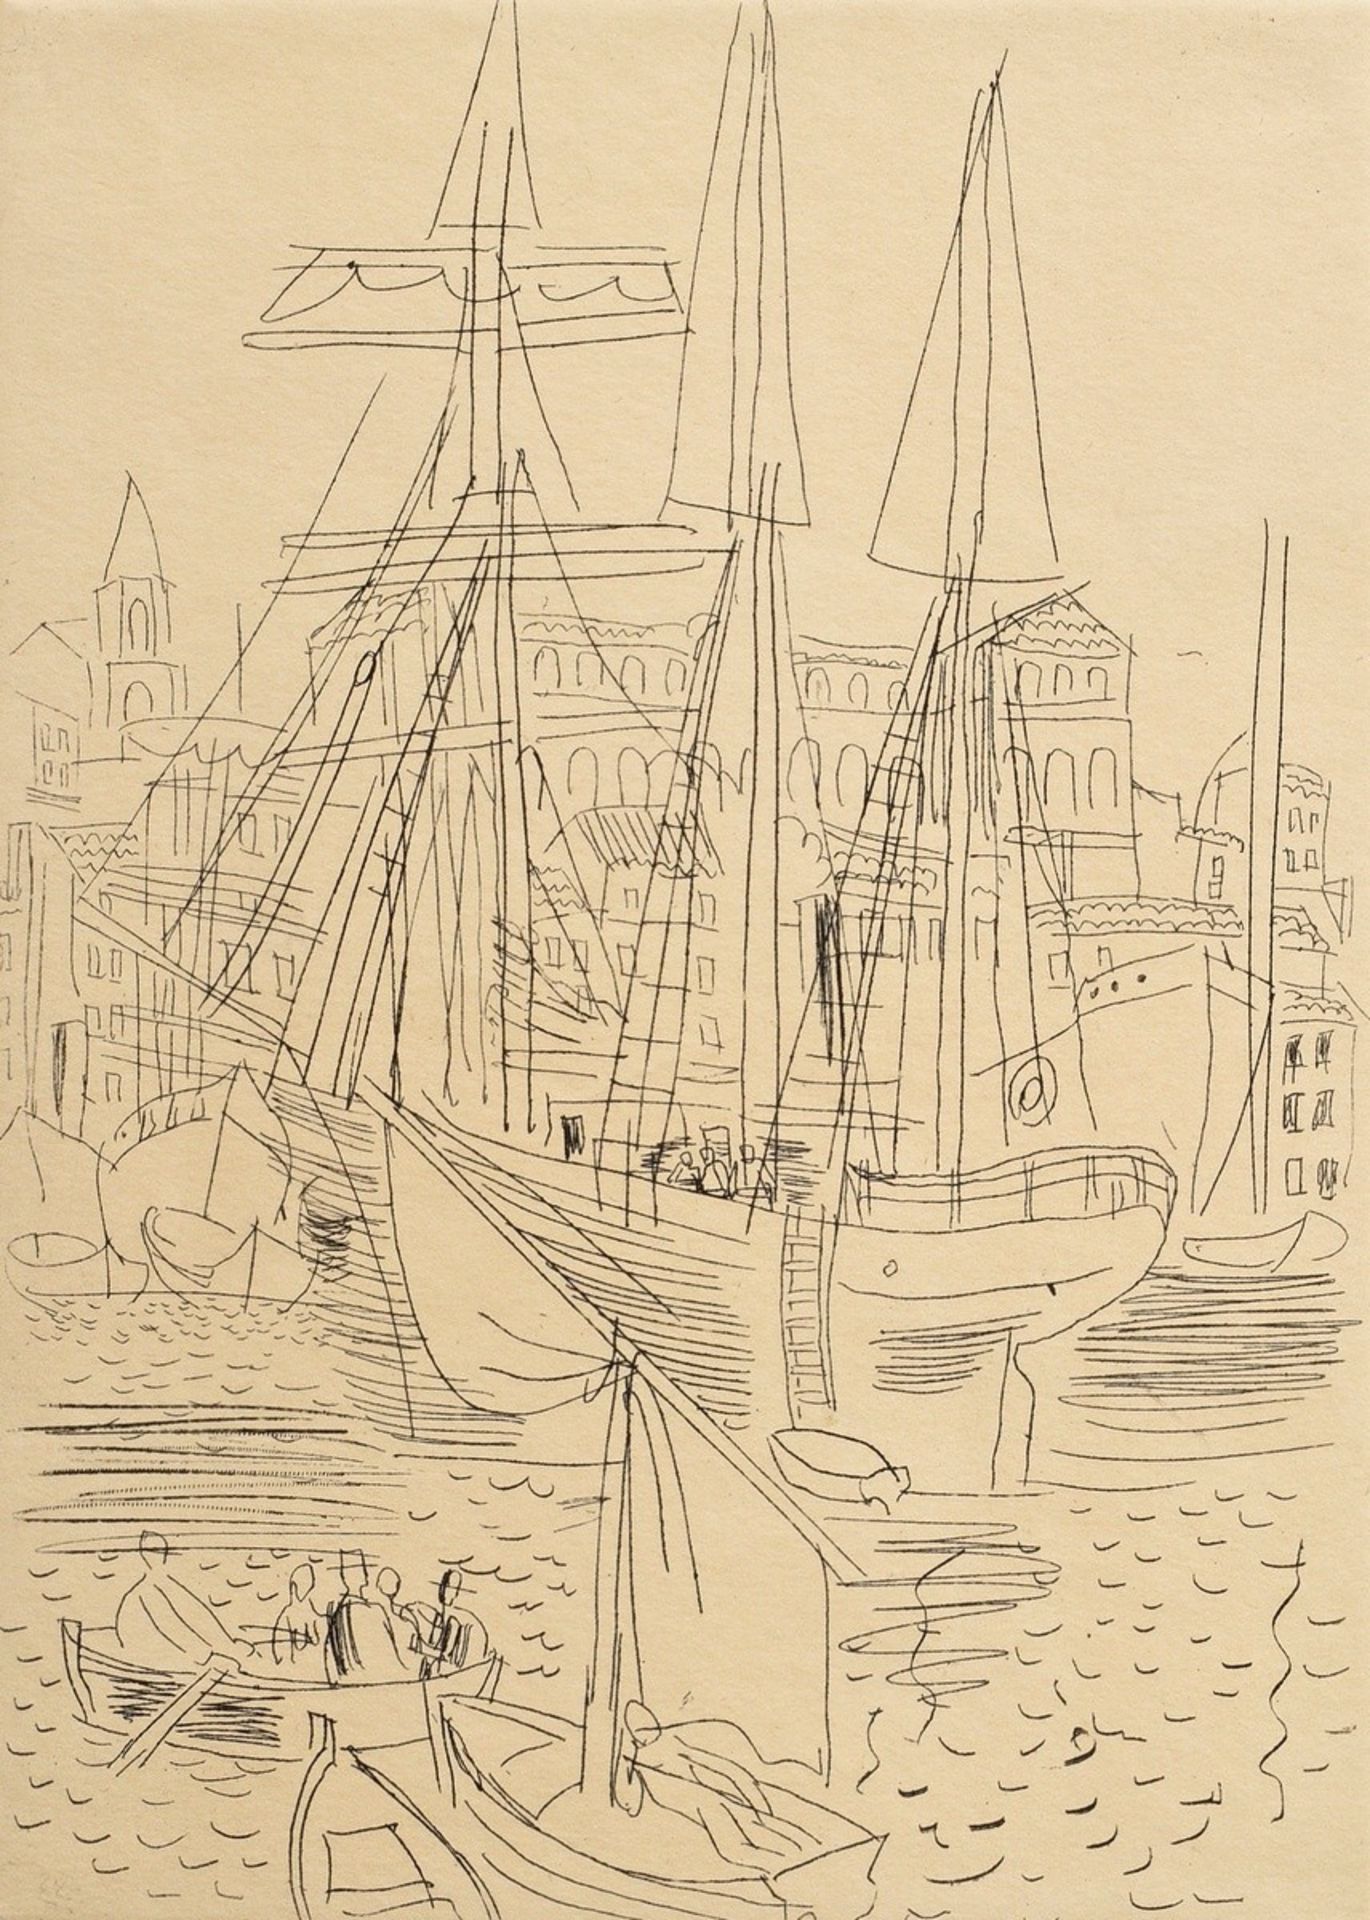 Dufy, Raoul (1877-1953) "Hafenansicht" um 1930, Radierung, aus: "Eugène Montfort. La belle enfant o